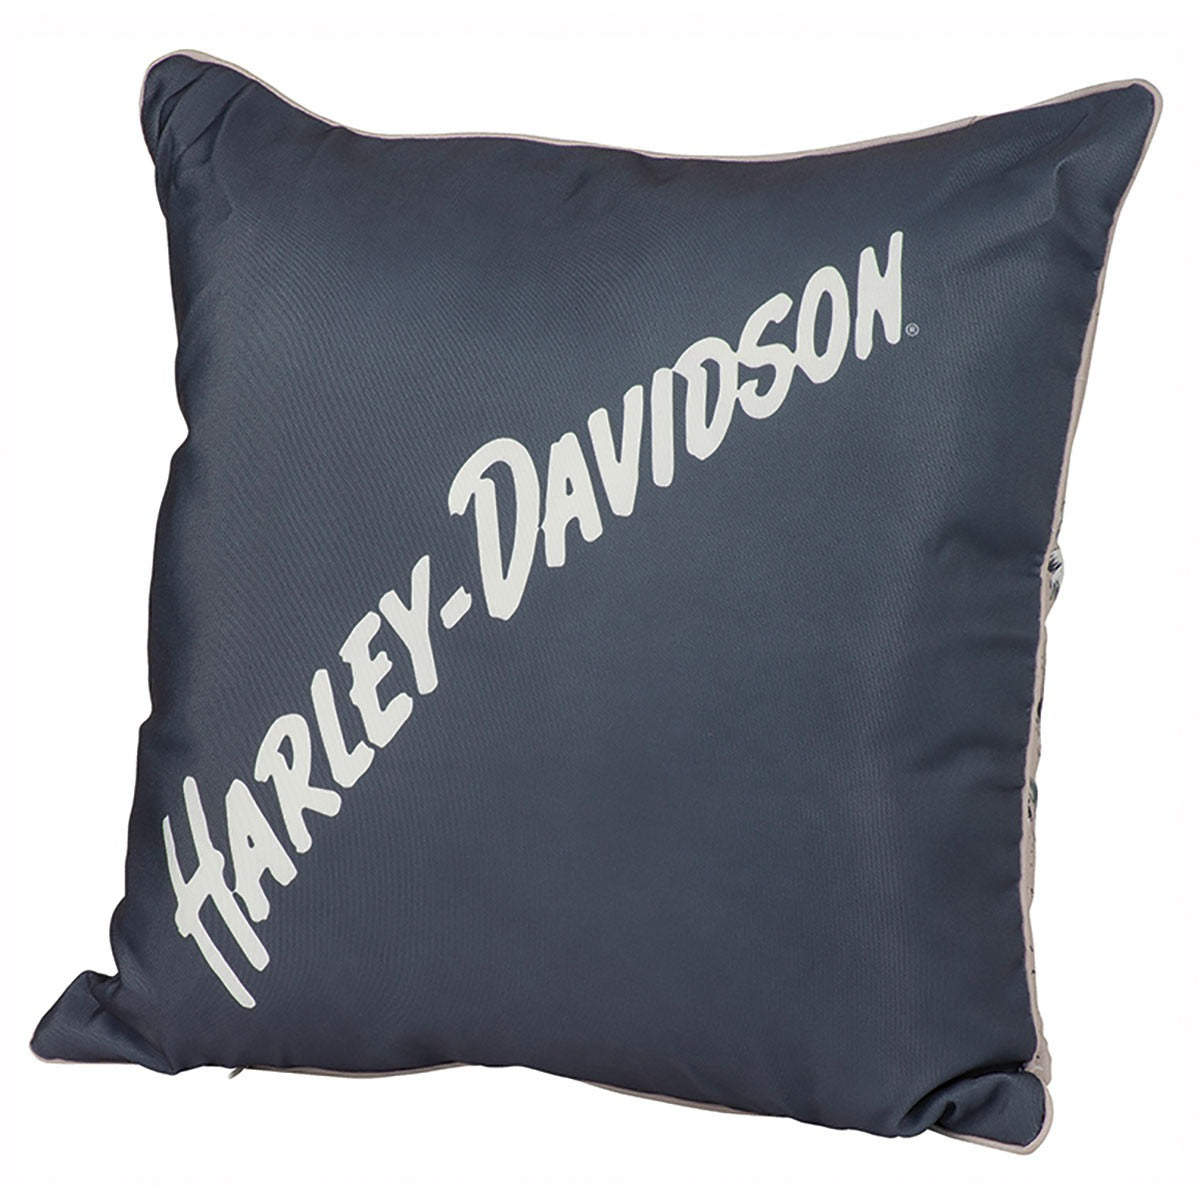 Harley-Davidson Celebration Outdoor Pillow